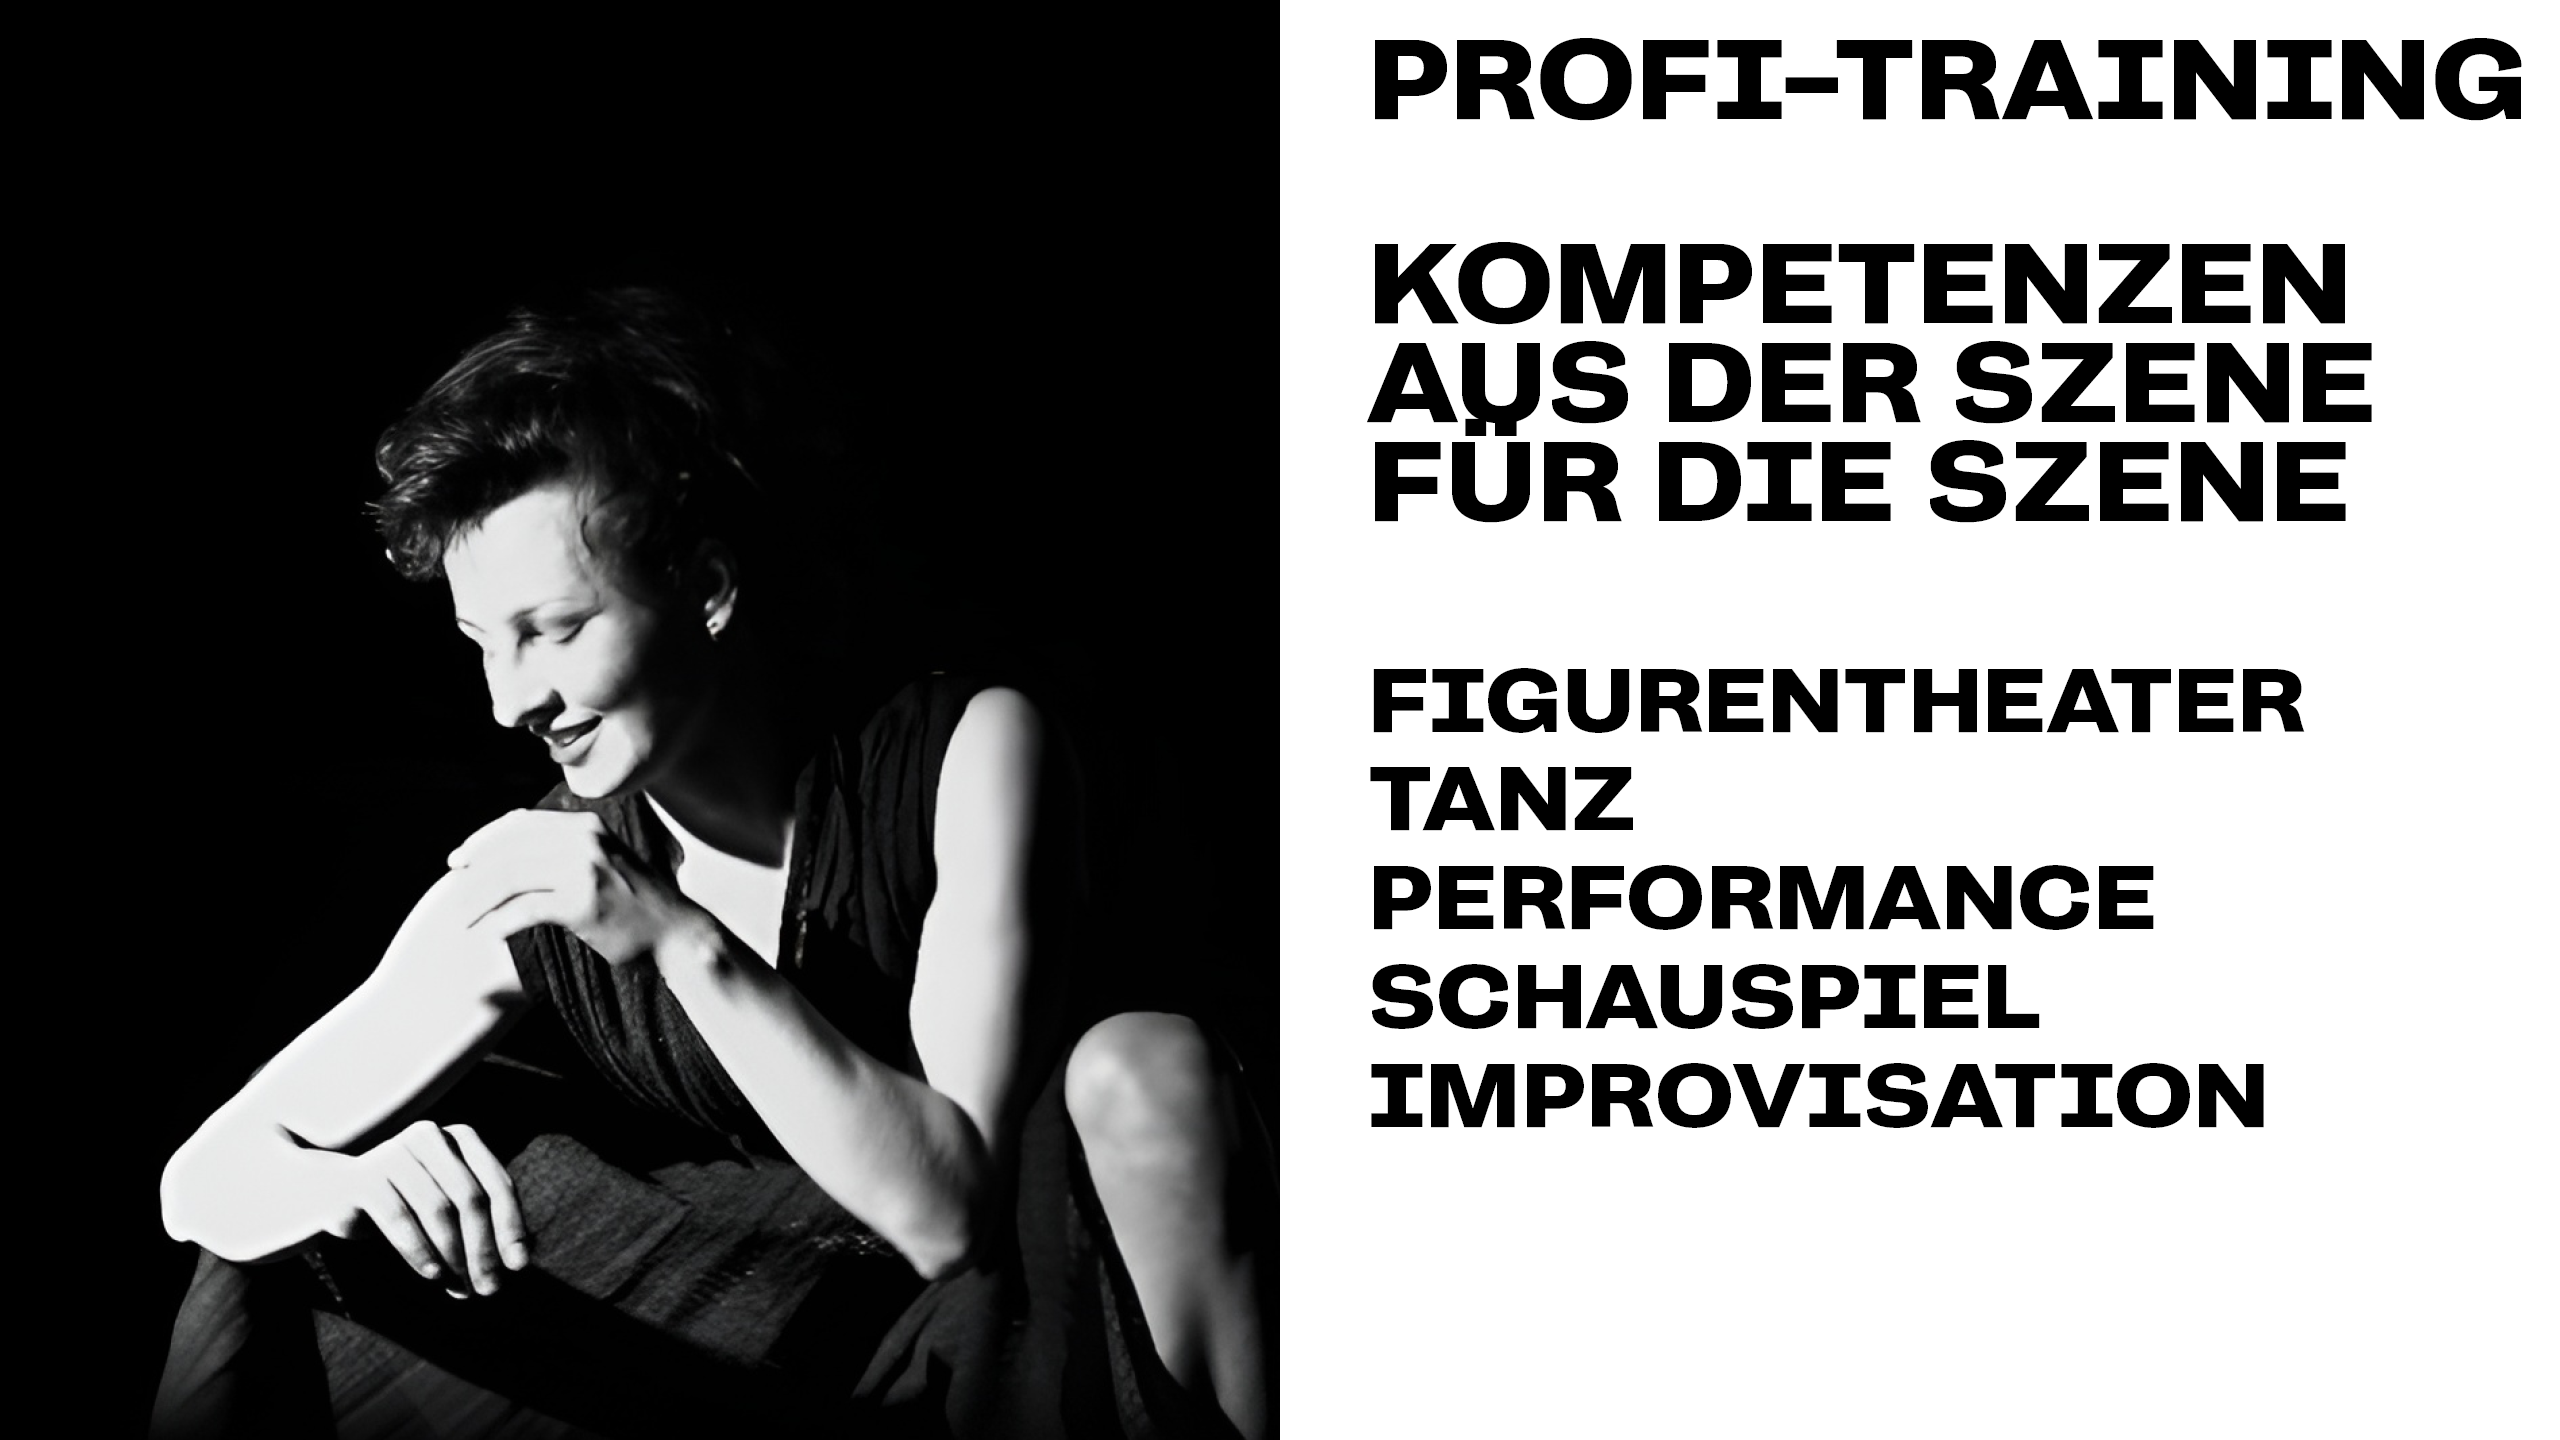 You are currently viewing Profi-Training im WUK Theater Studio